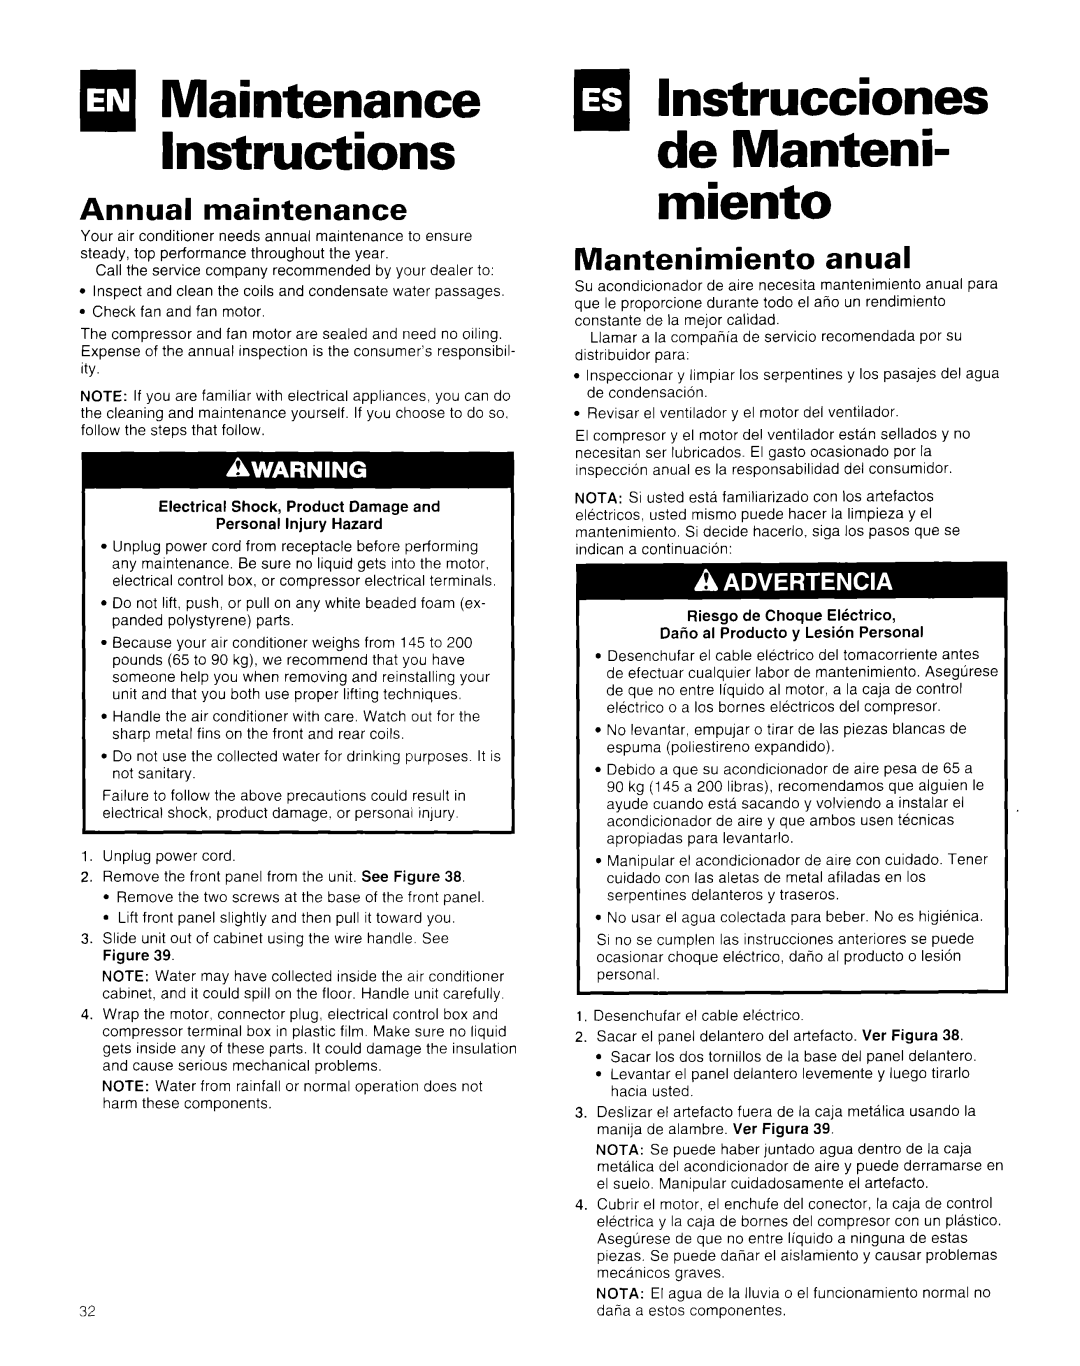 Whirlpool AR1800XA0 Maintenance Instructions, B Instrucciones de Manteni- miento, Annual maintenance, Mantenimiento anual 